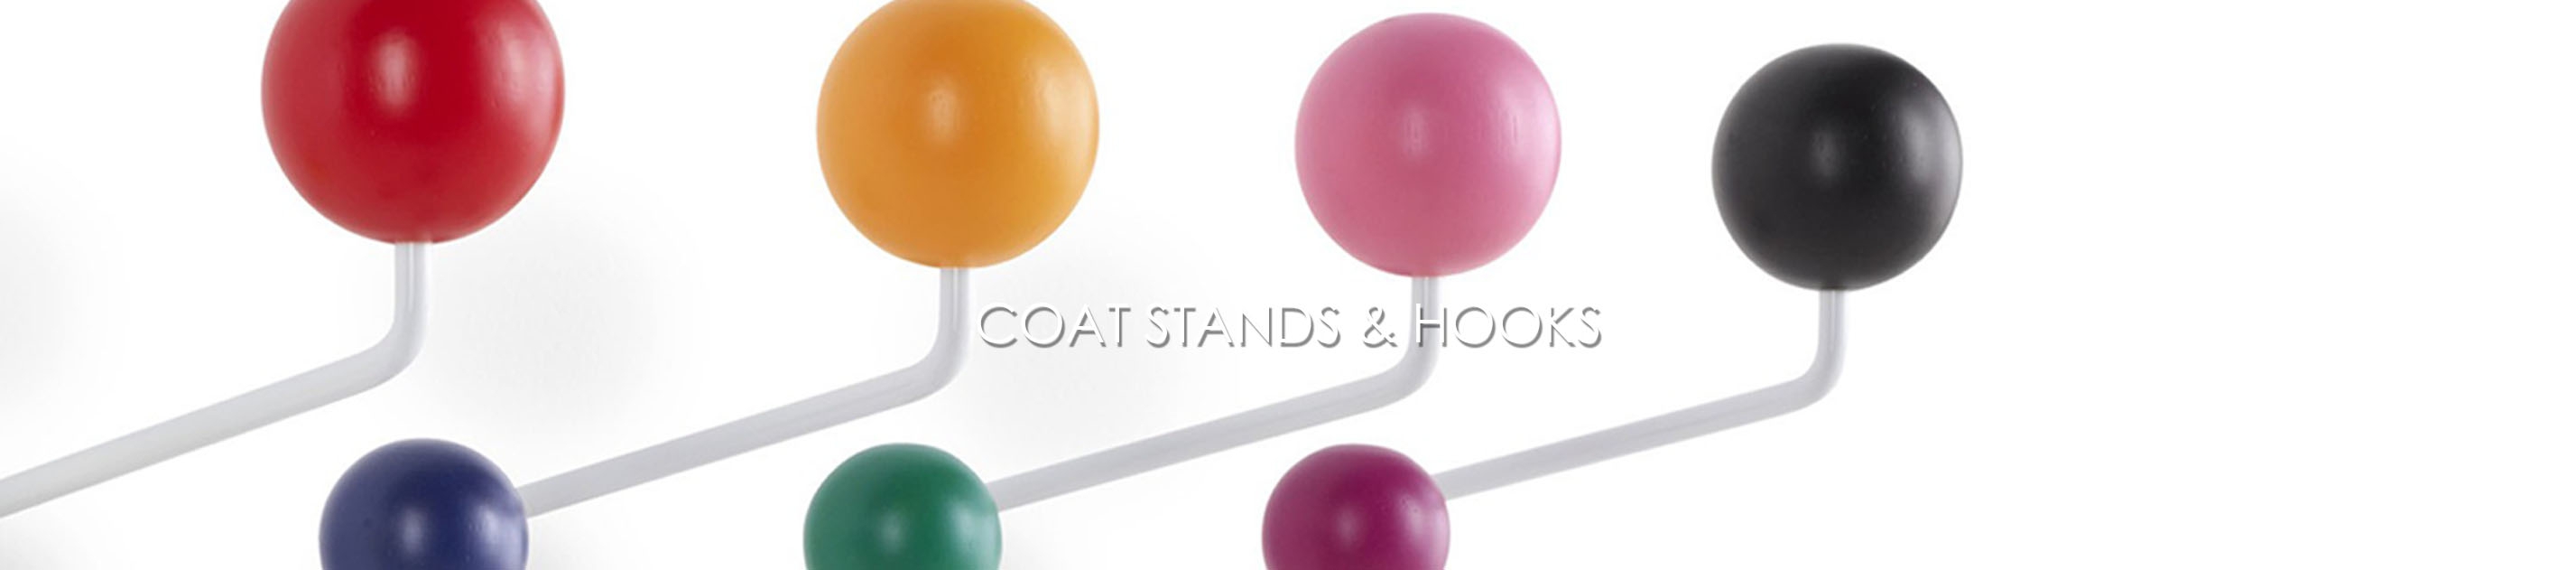 Coat Stands & Hooks